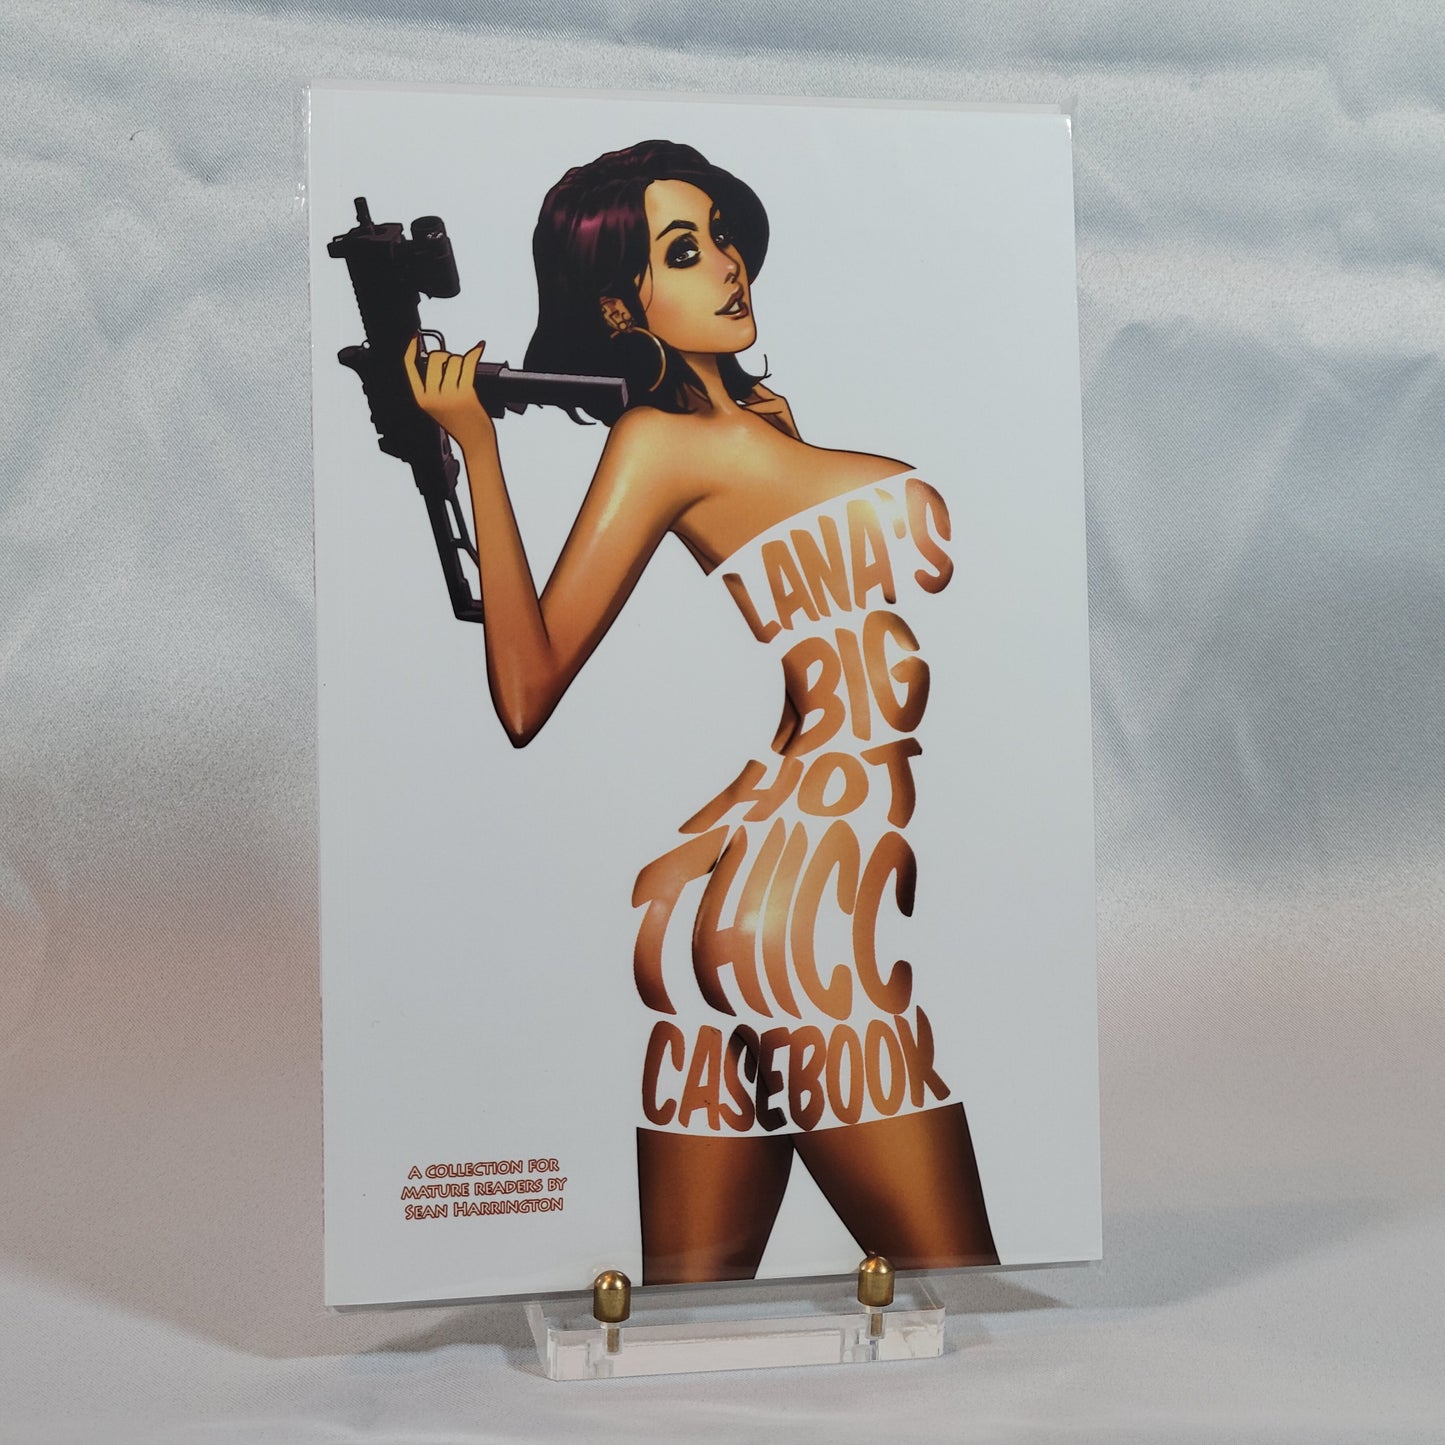 Lana's Big Hot Thicc Casebook (Standard Cover) w/ FREE art prints